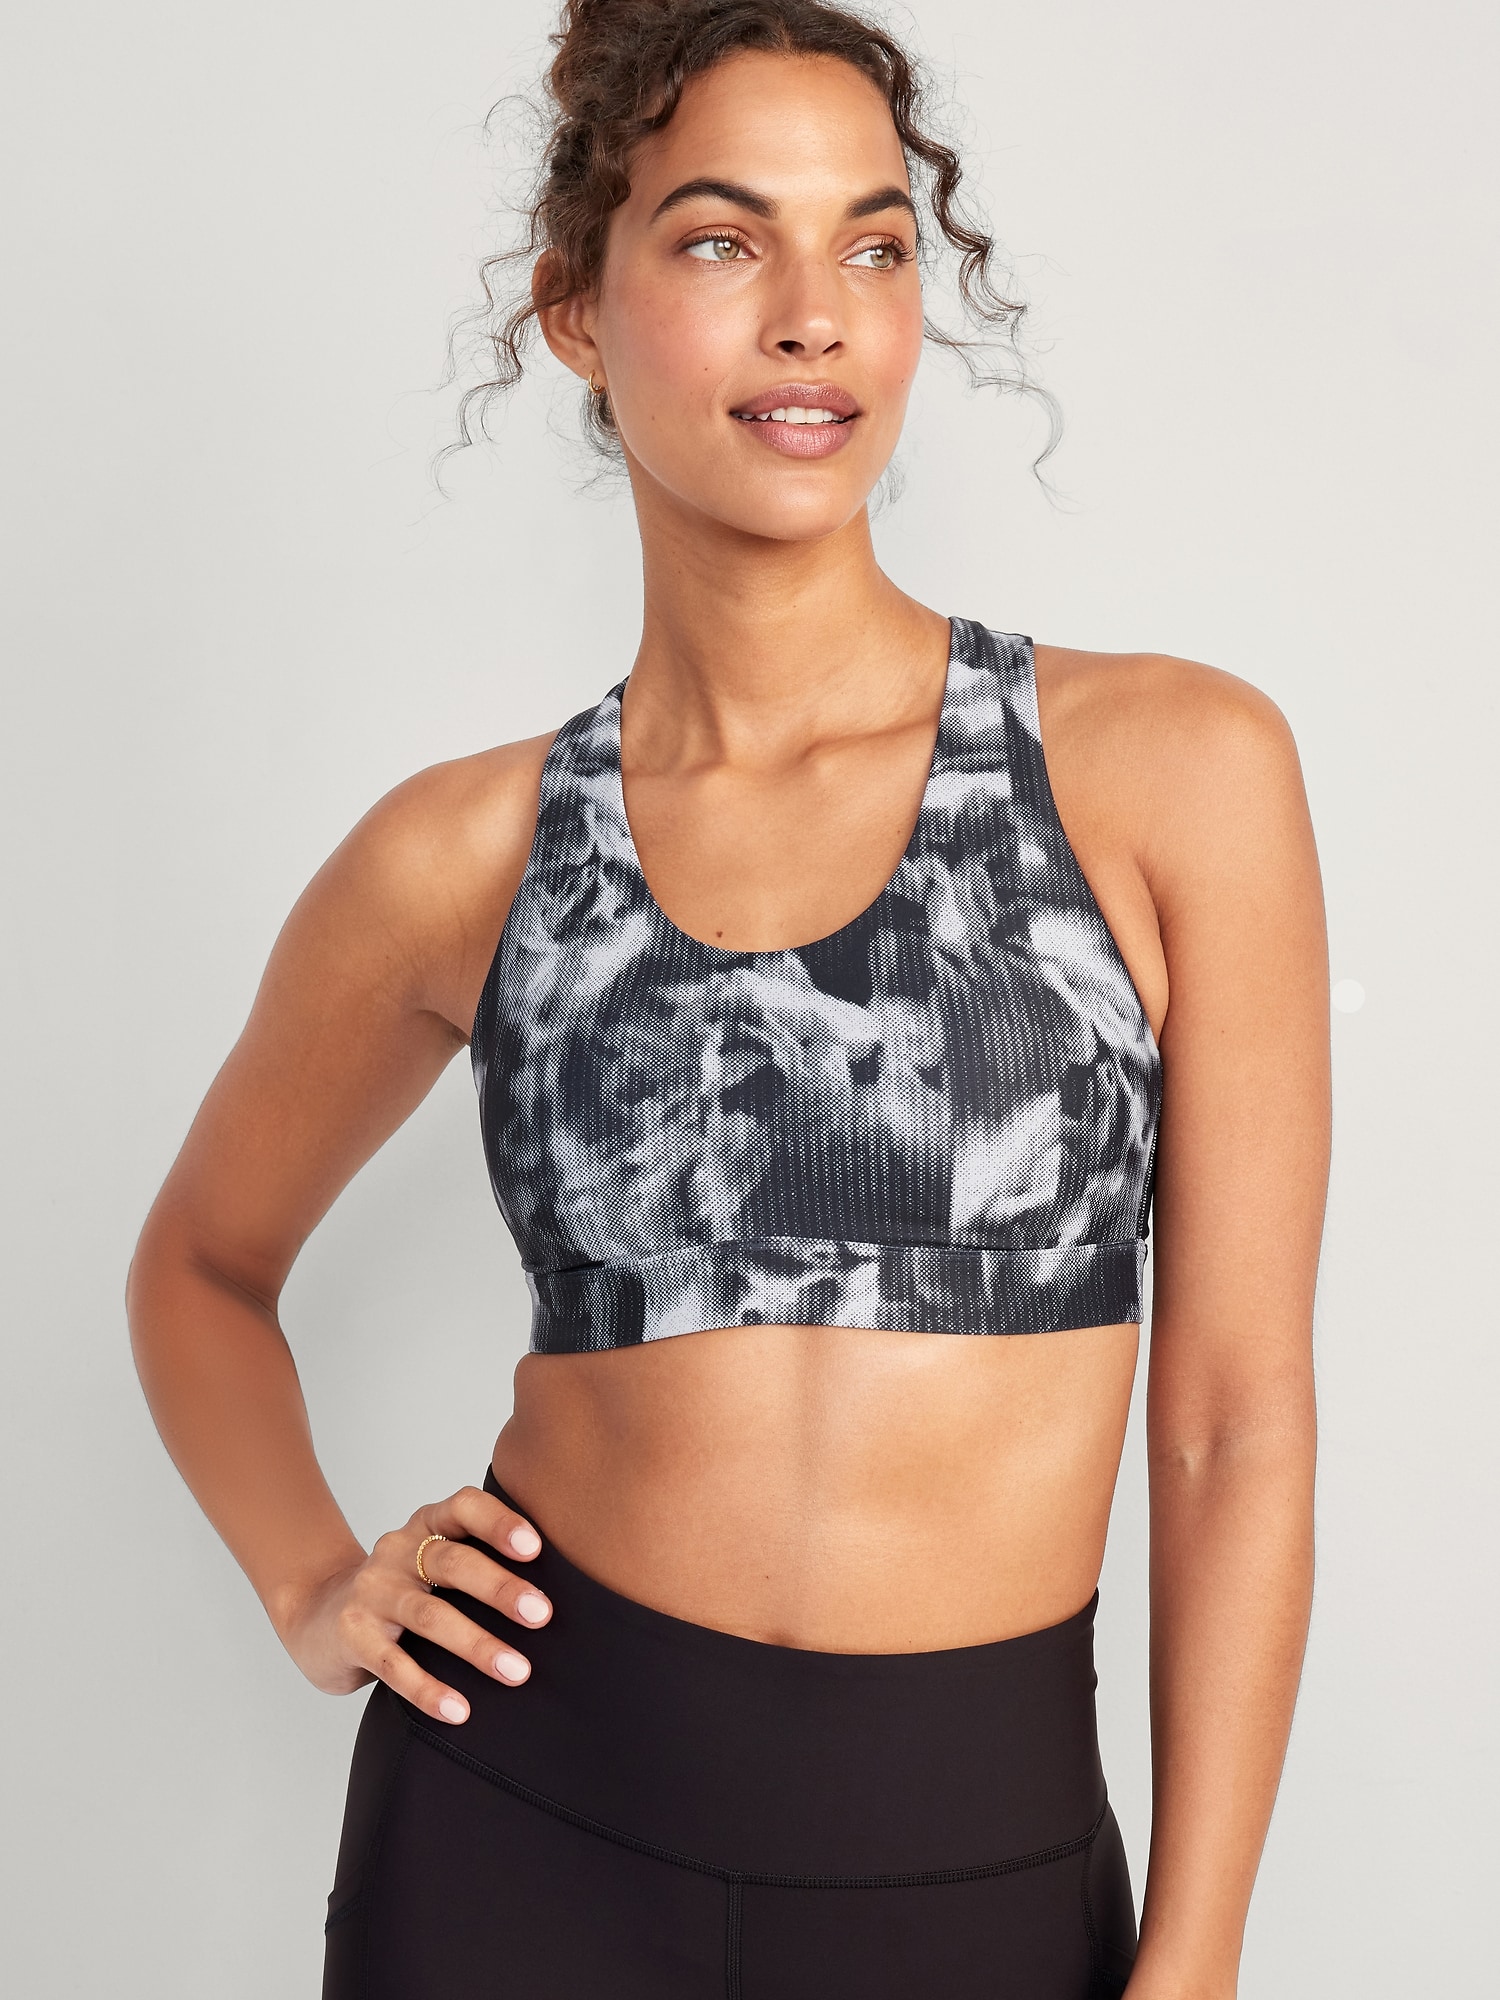 Nike Women's Medium Support Sports Bra Camo Design -1-Piece Pad